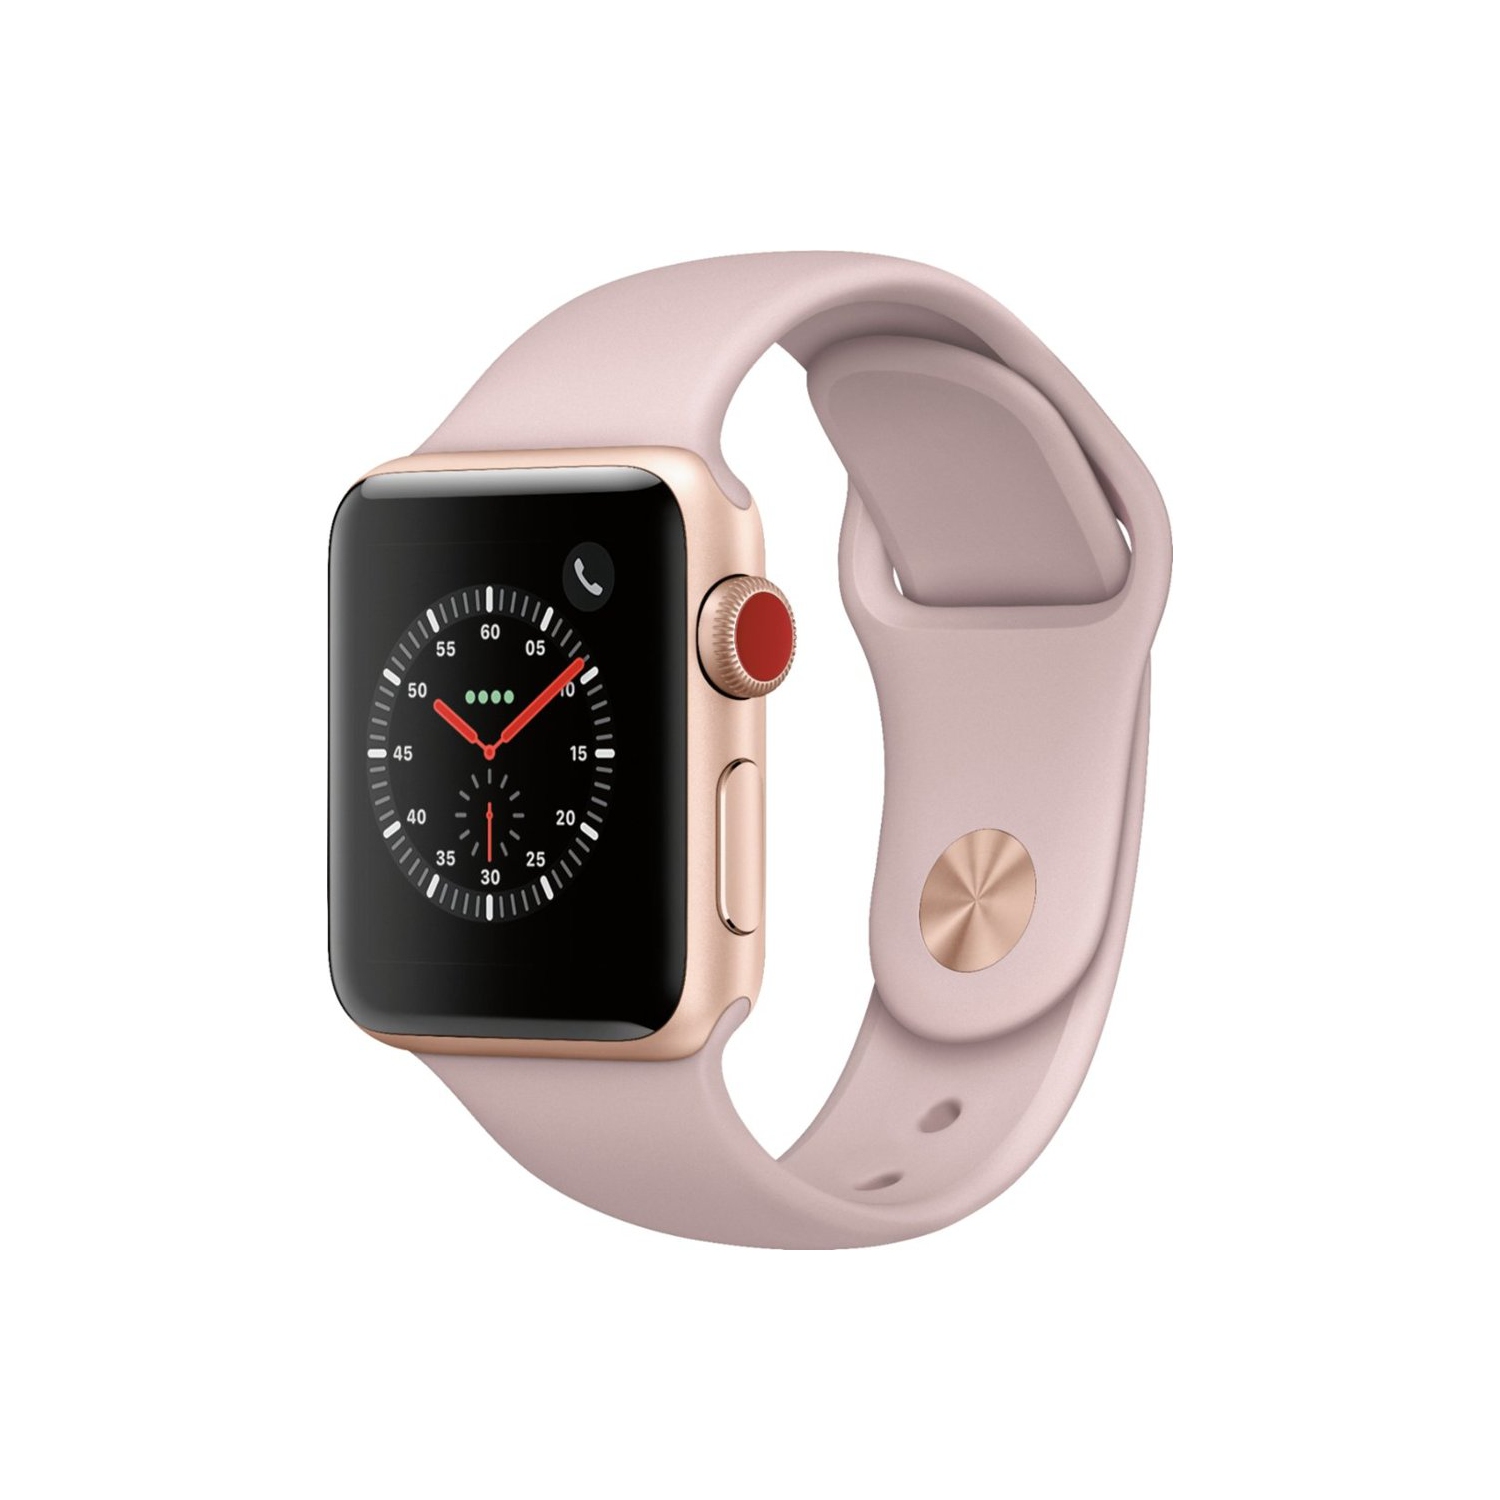 Refurbished (Good) - Apple Watch Series 3 (GPS + Cellular) - 38mm - Gold Aluminum Case - Pink Sand Sport Band